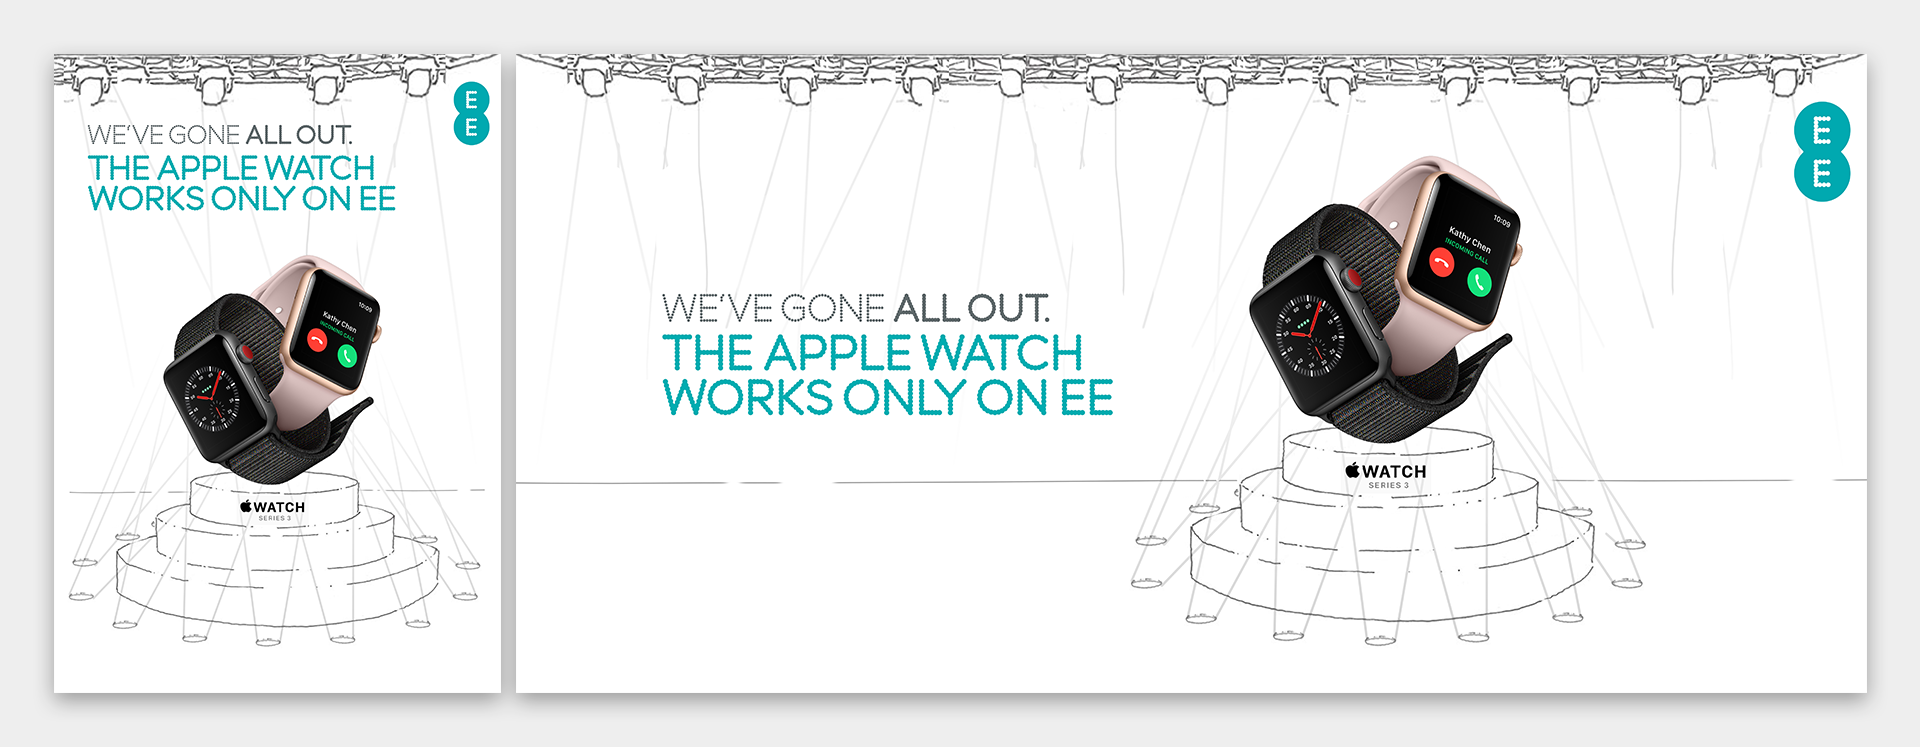 Apple-Watch-Series3-EE-scamps